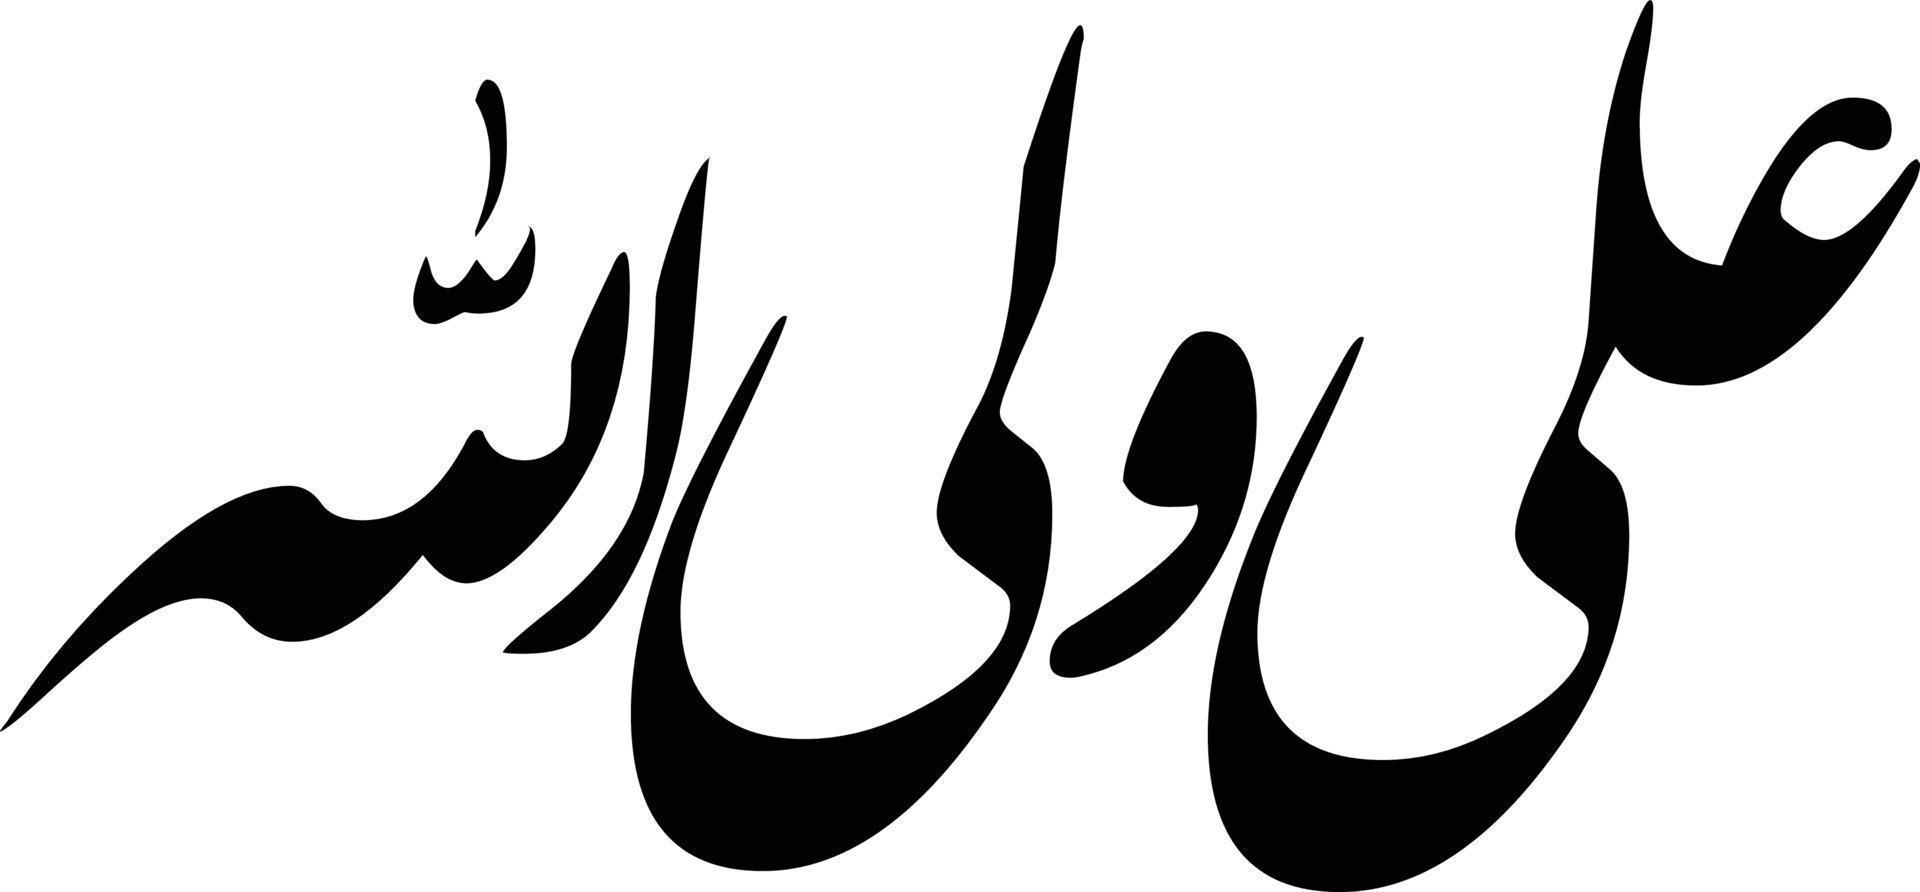 ali wali olaha título islâmico urdu caligrafia árabe vetor livre